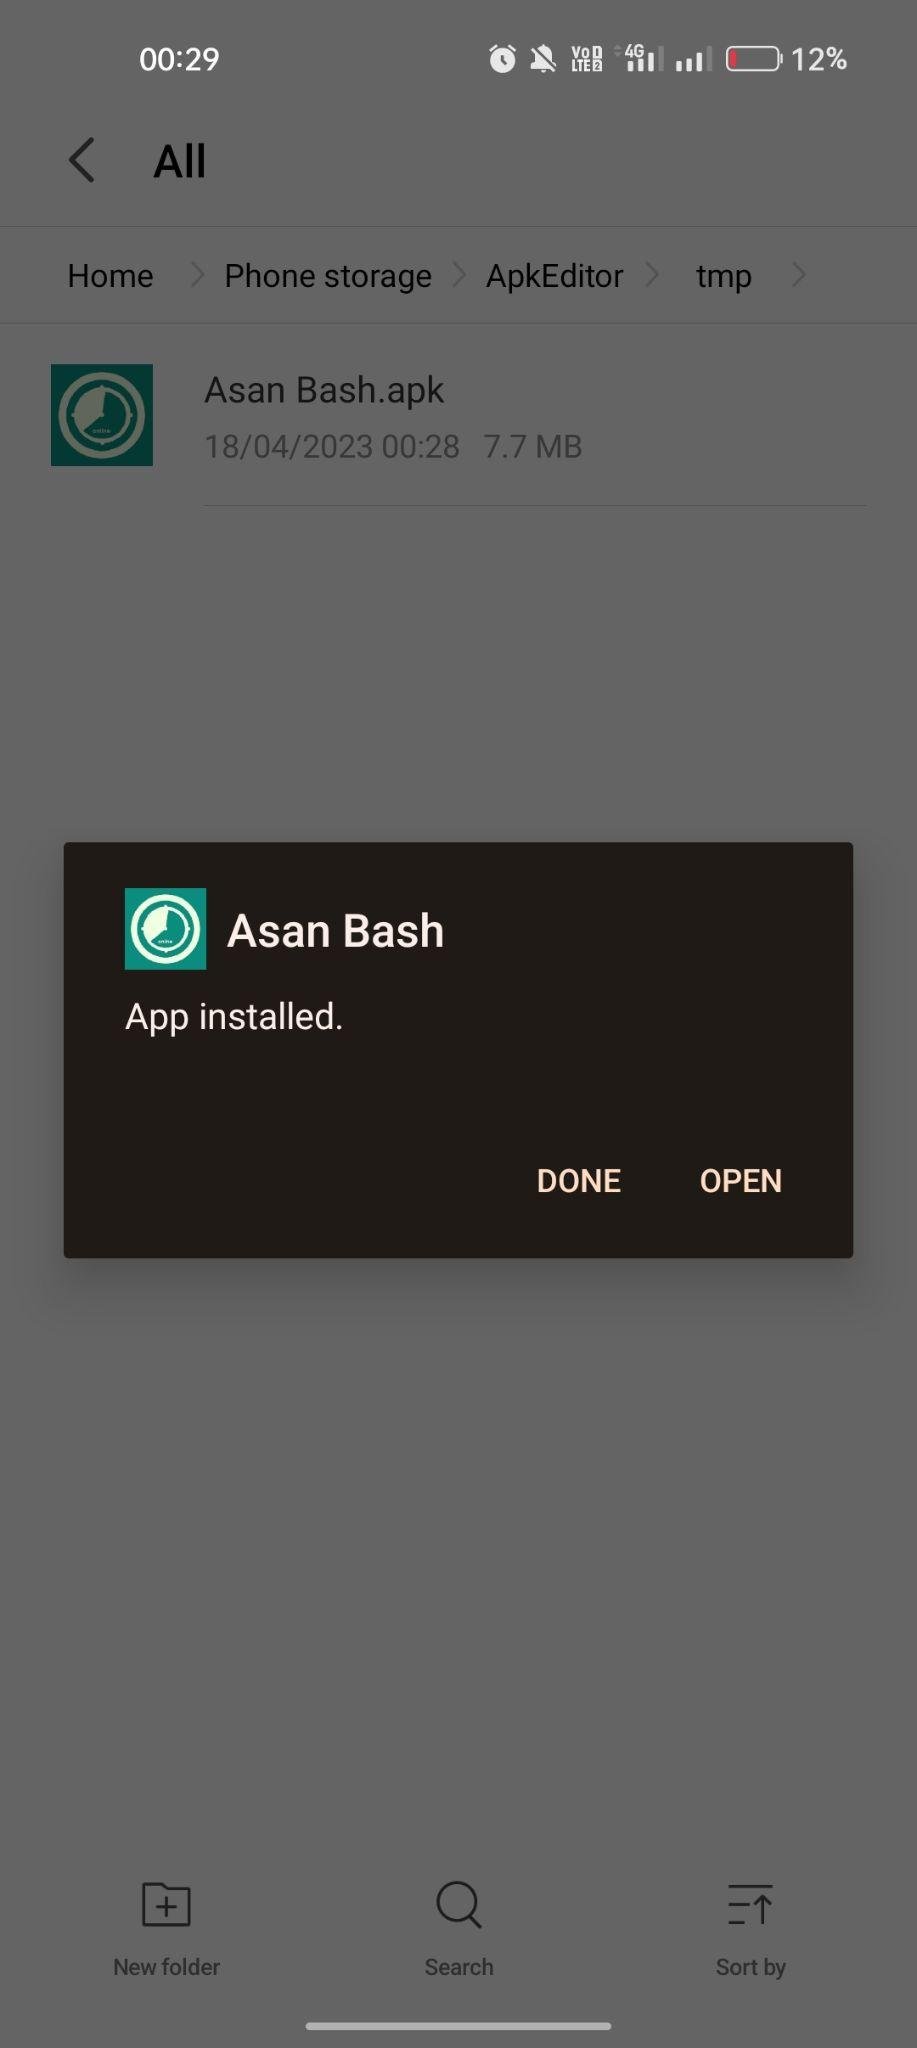 Asan Bash apk installed